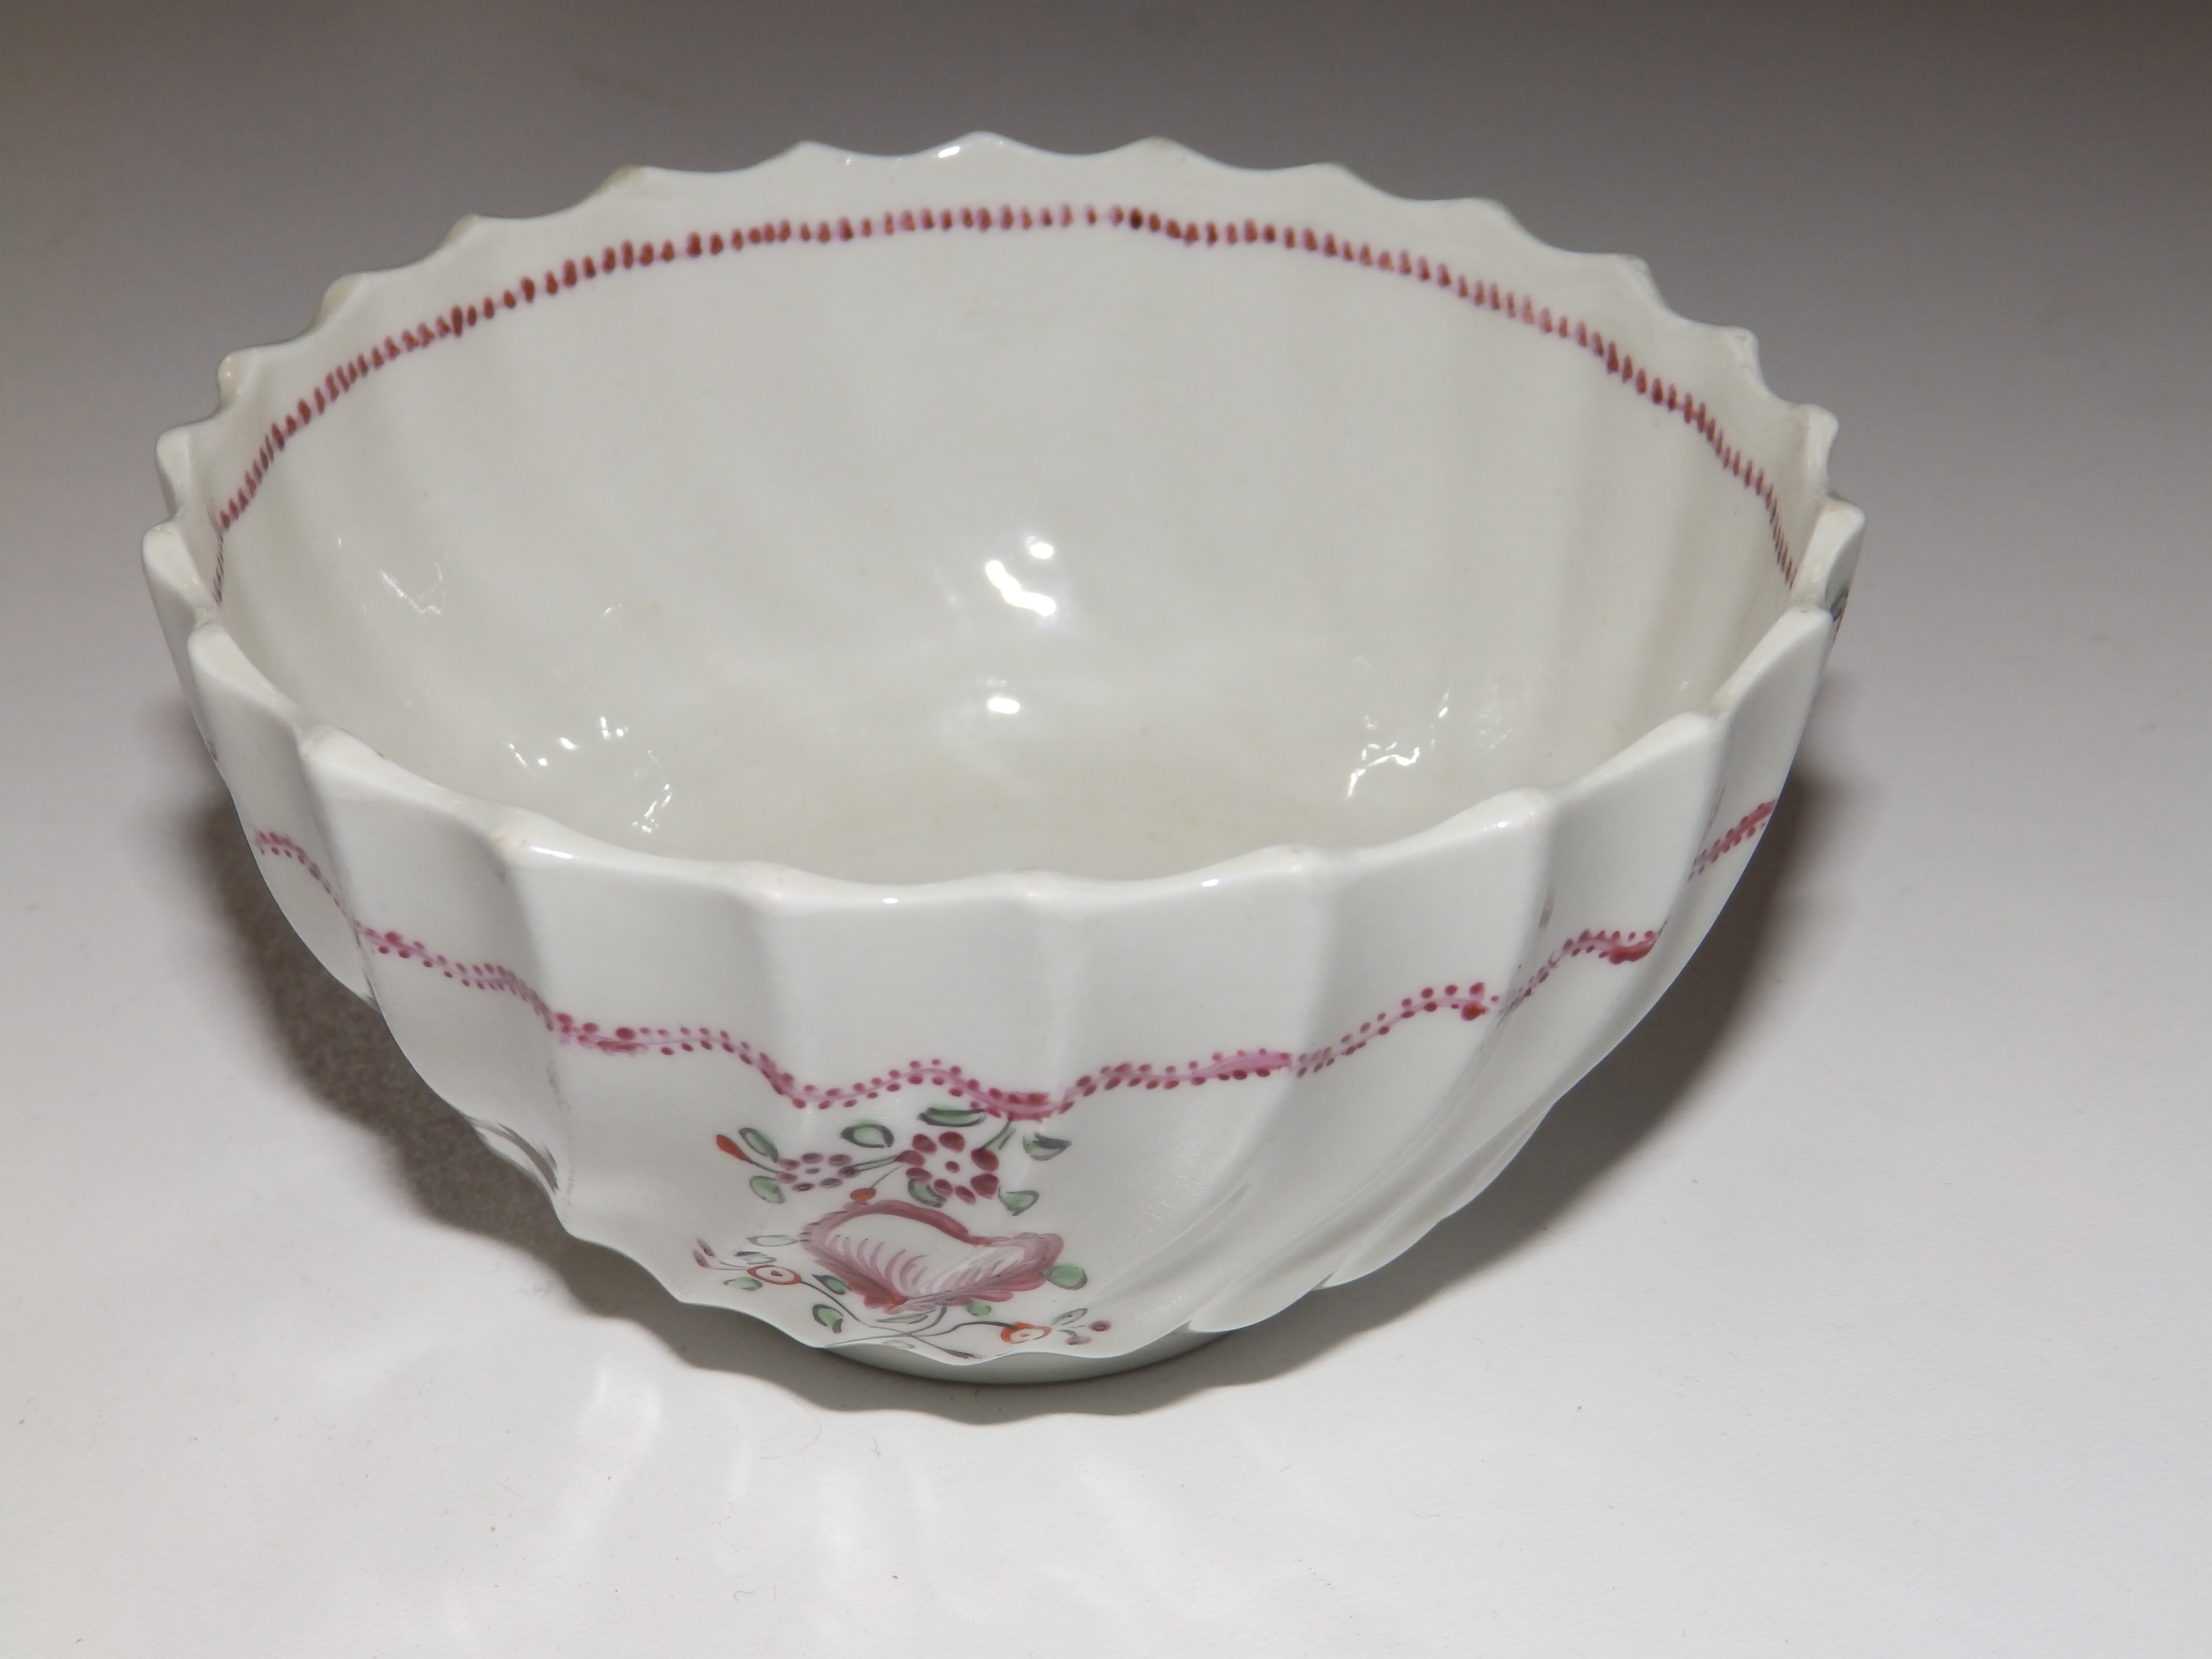 An A & E Keeling (Factory X) porcelain ogee fluted sugar bowl